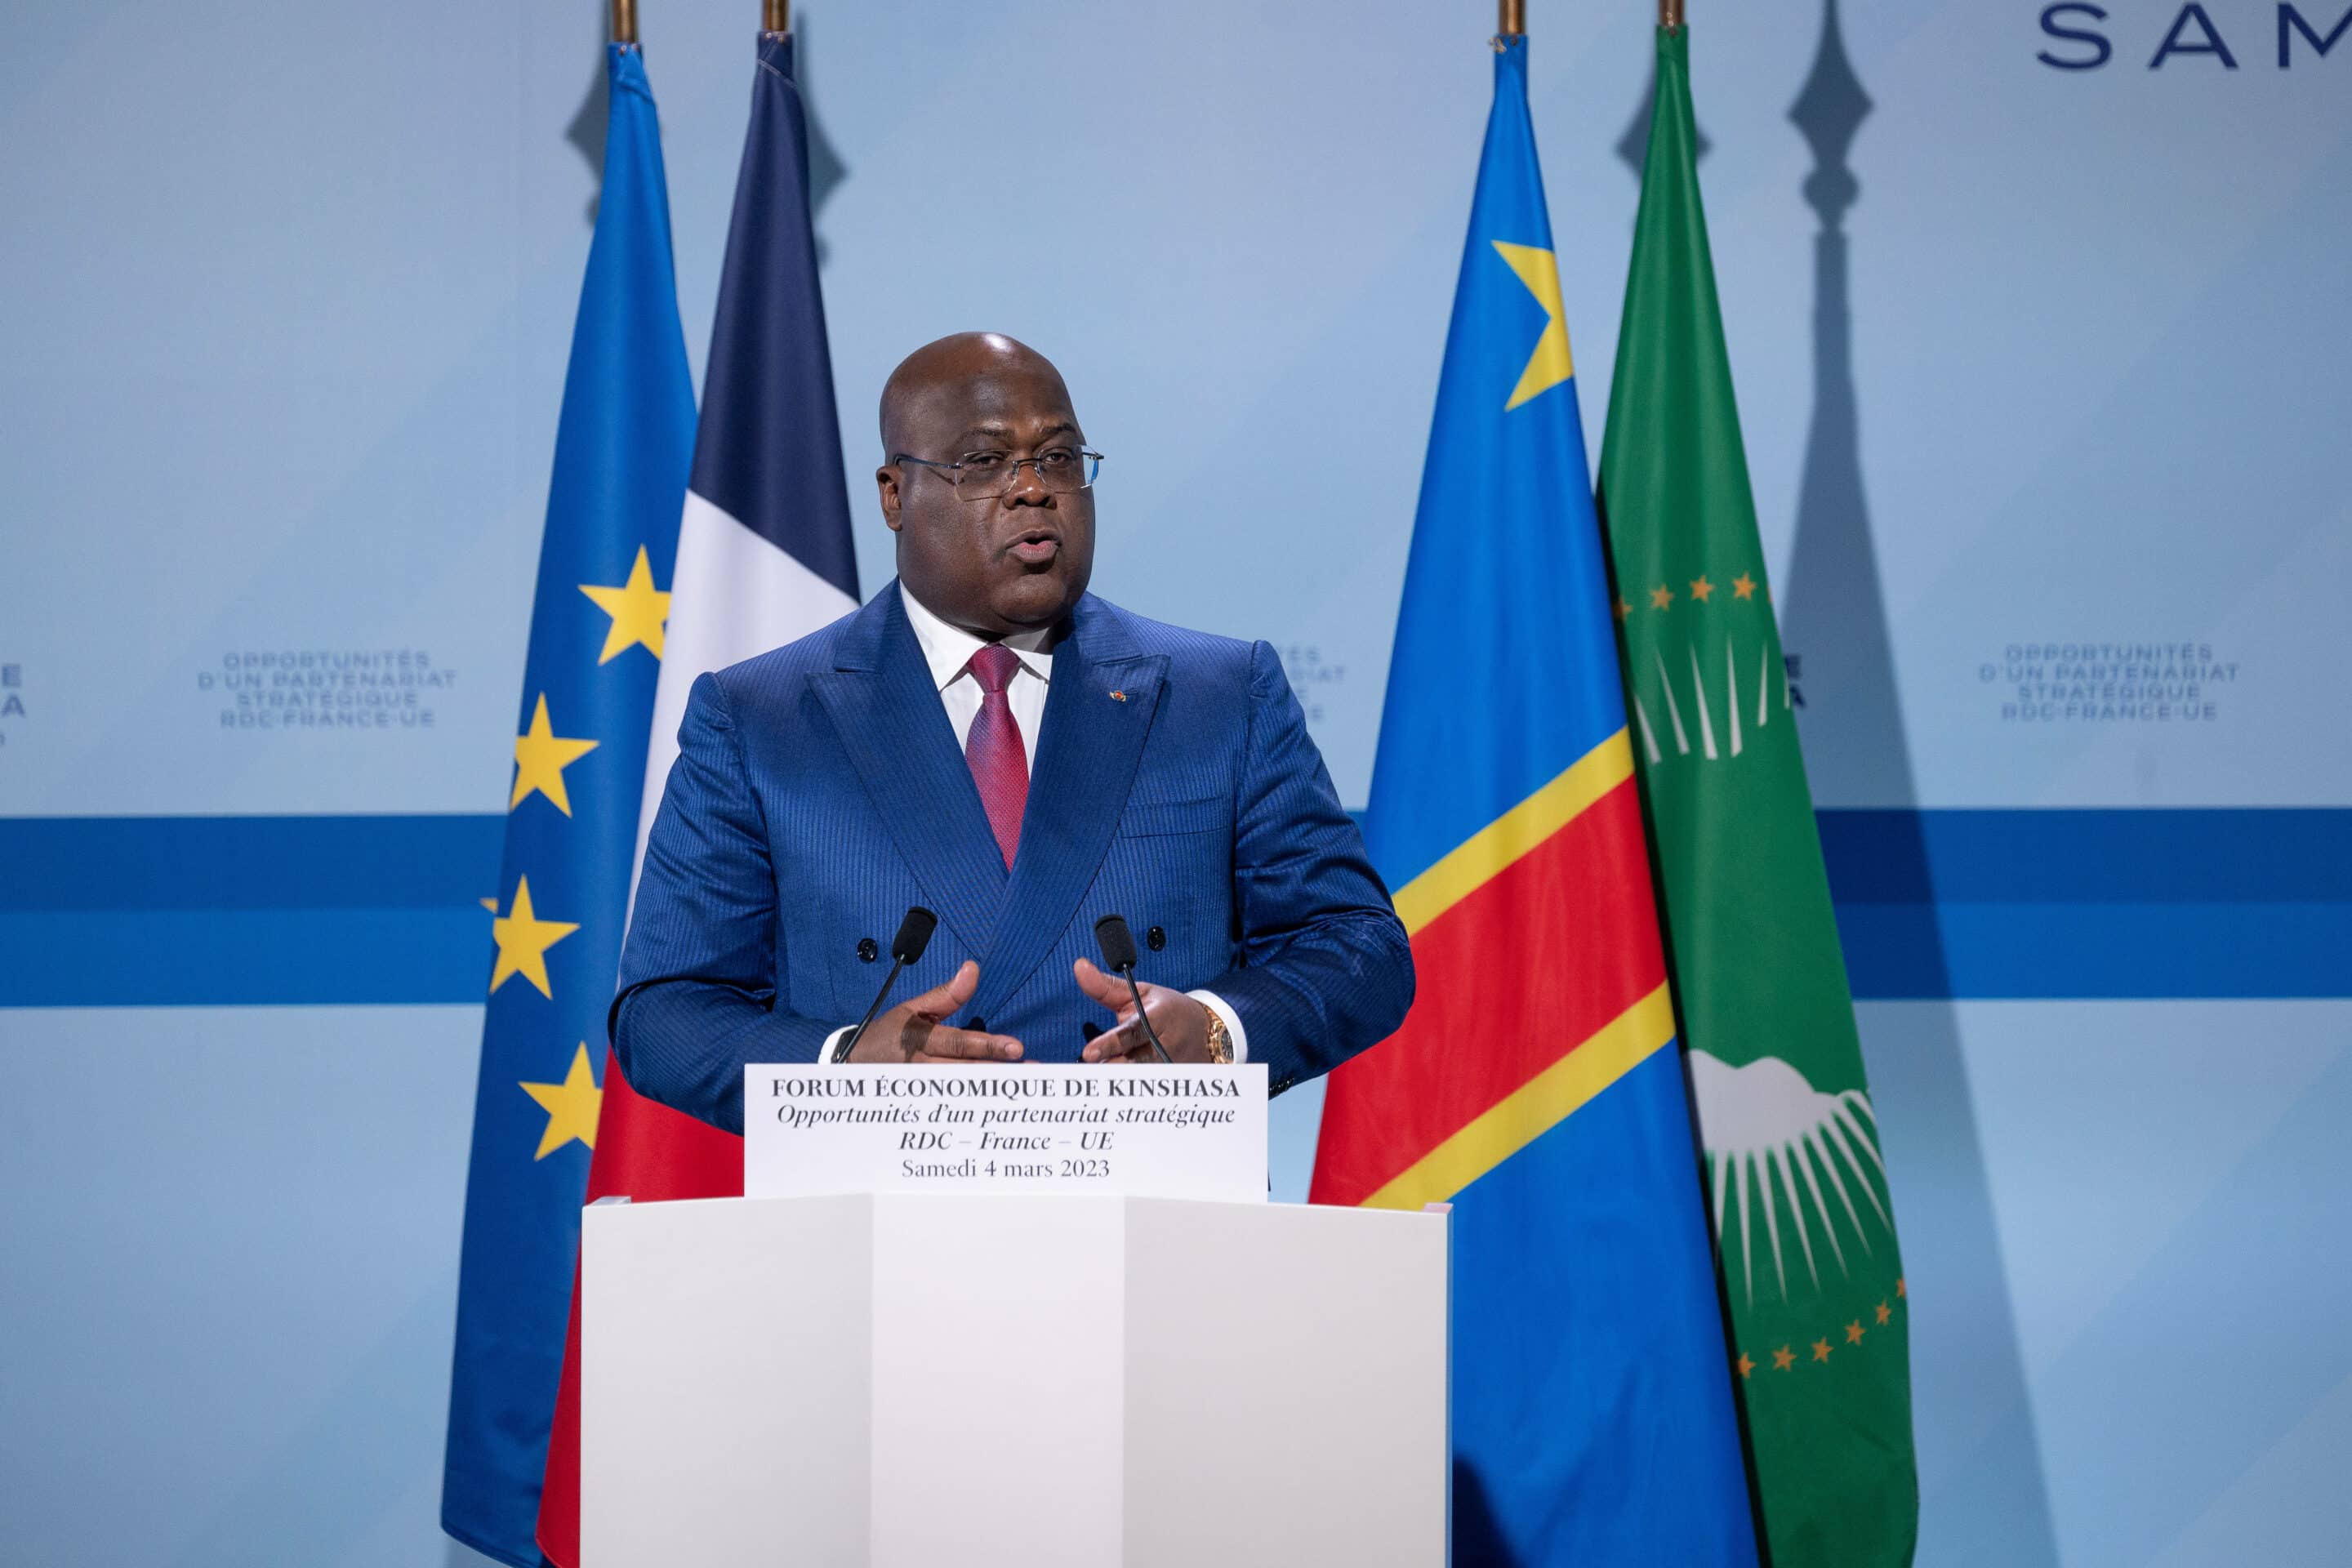 Emmanuel Macron and President Felix Tshisekedi attend an economic forum.
Kinshasa, DEMOCRATIC REPUBLIC OF THE CONGO-04/03/2023
//01JACQUESWITT_Forumeco014/Credit:Jacques Witt/SIPA/2303041915